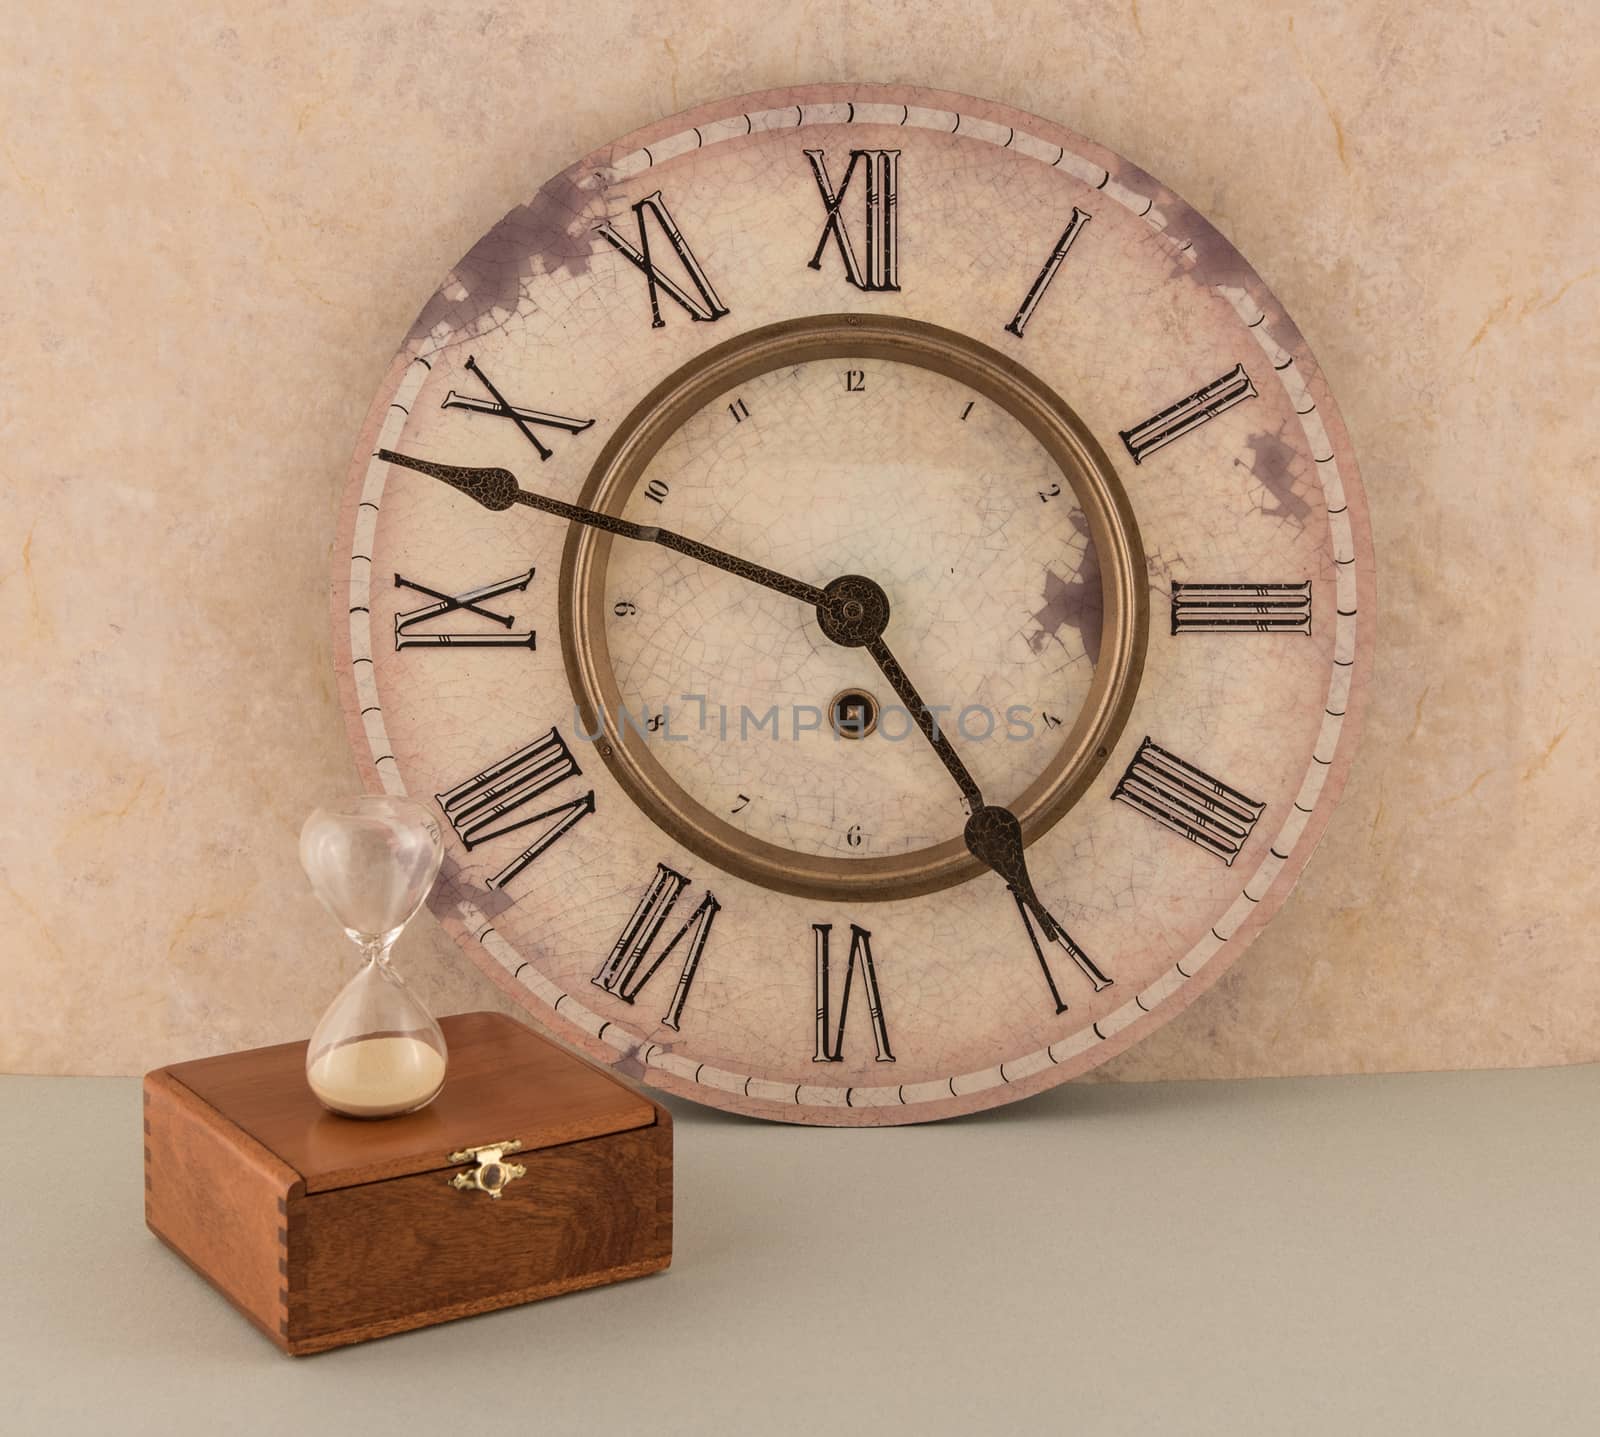 Wall clock and hourglass scene